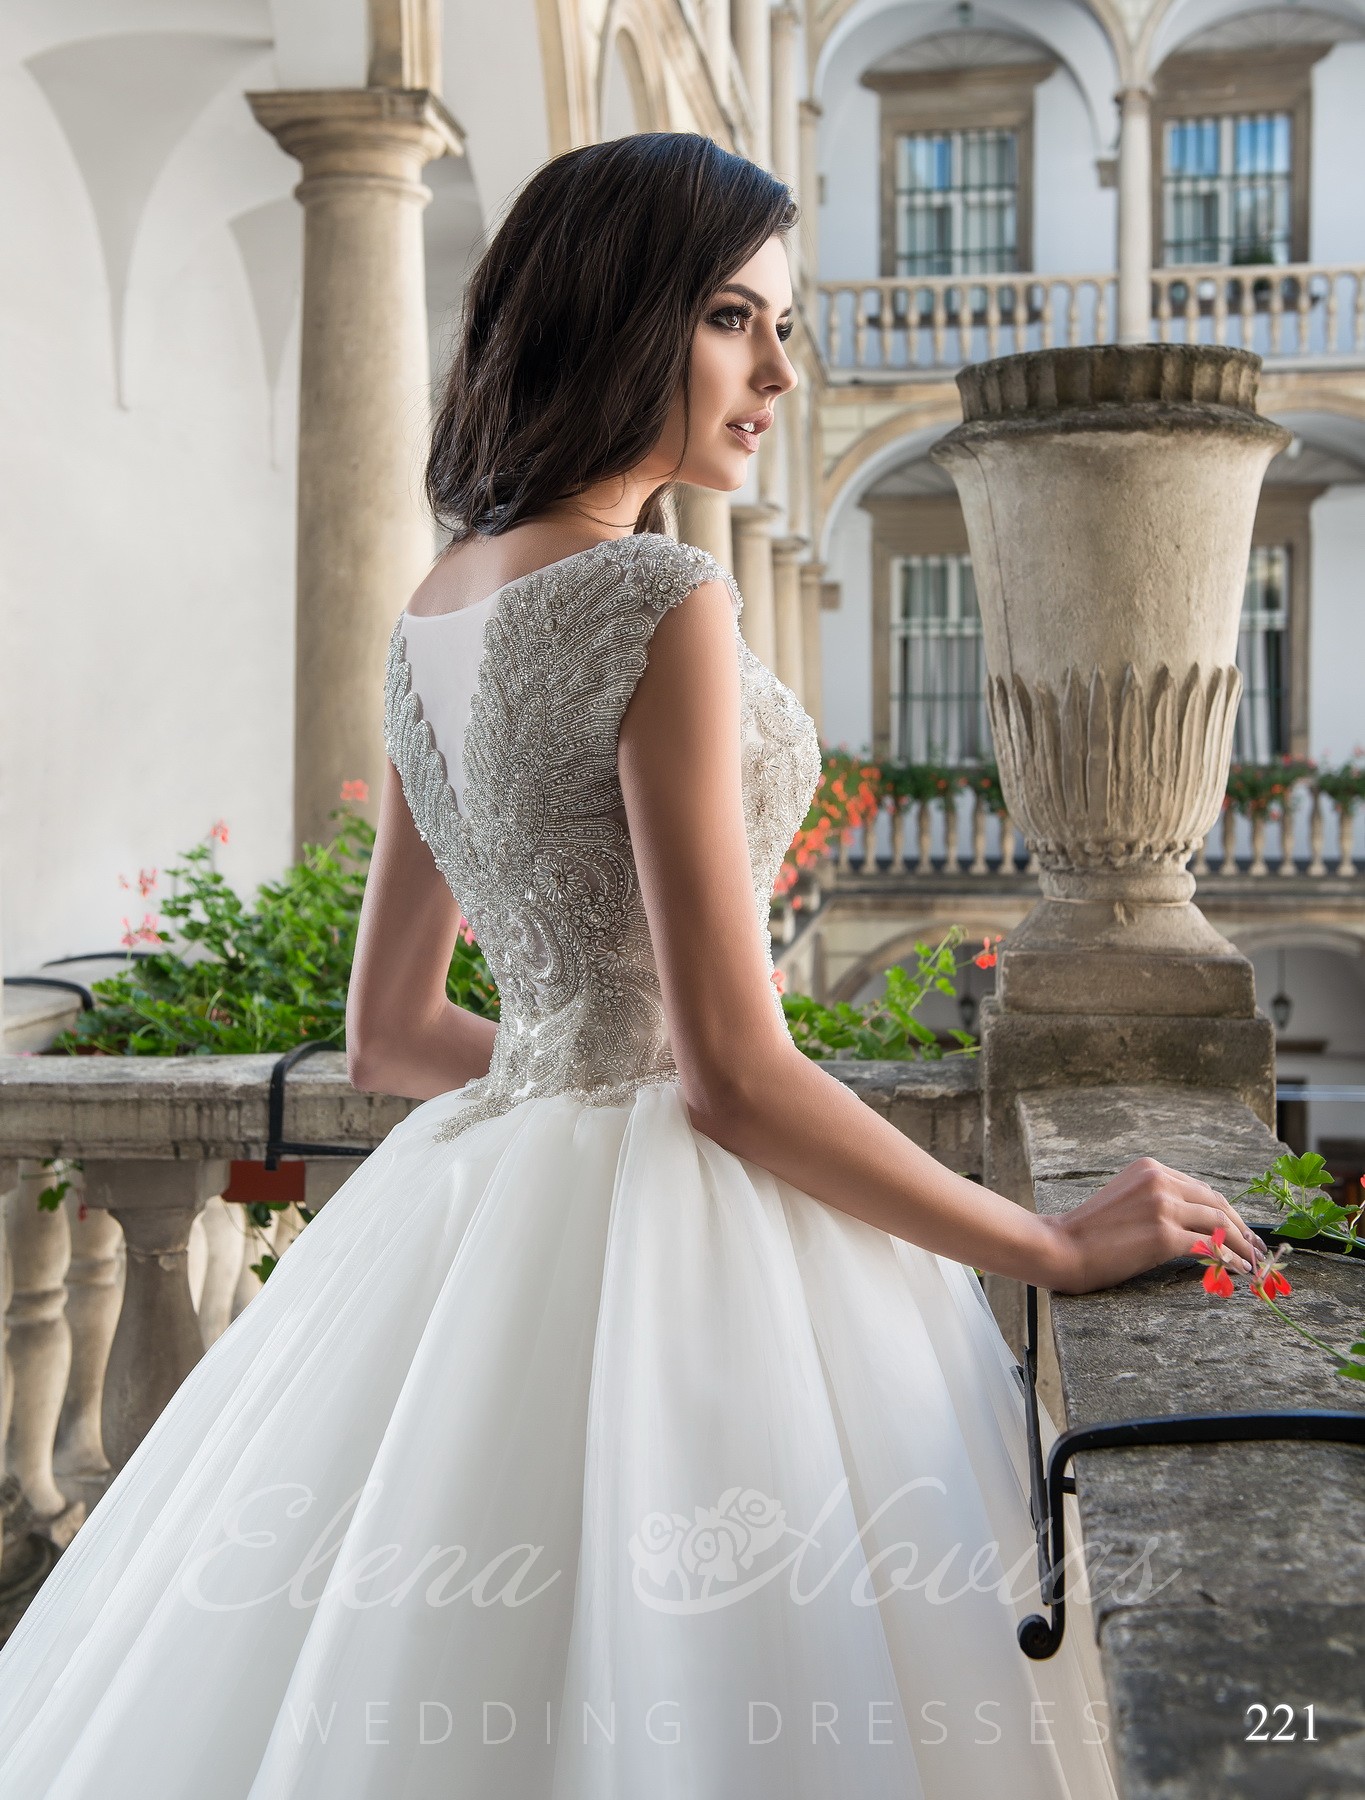 Fatin wedding dress model 221